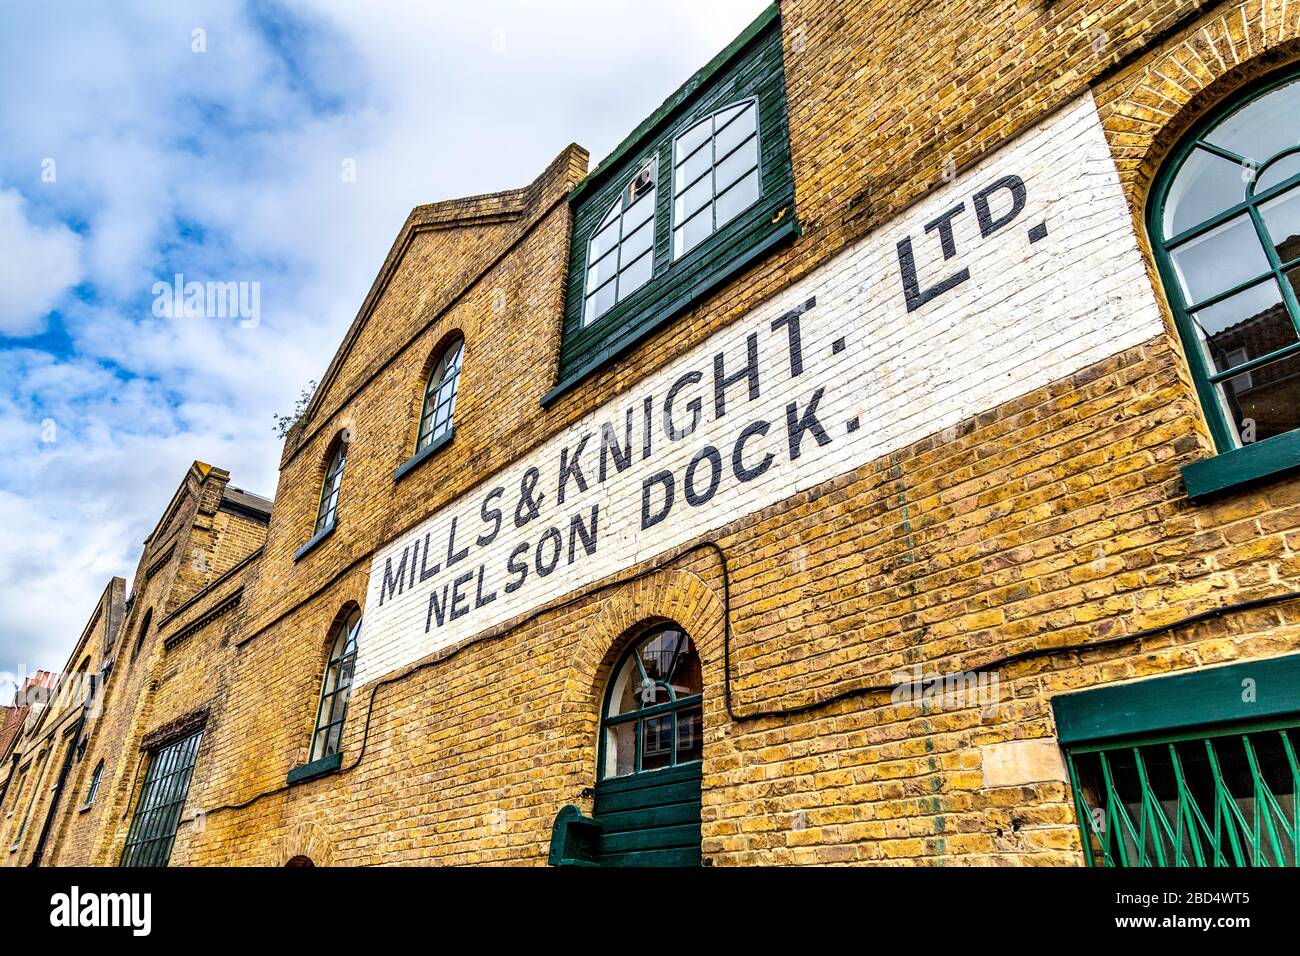 Mills & Knight Ltd Nelson Dock, London, Großbritannien Stockfoto